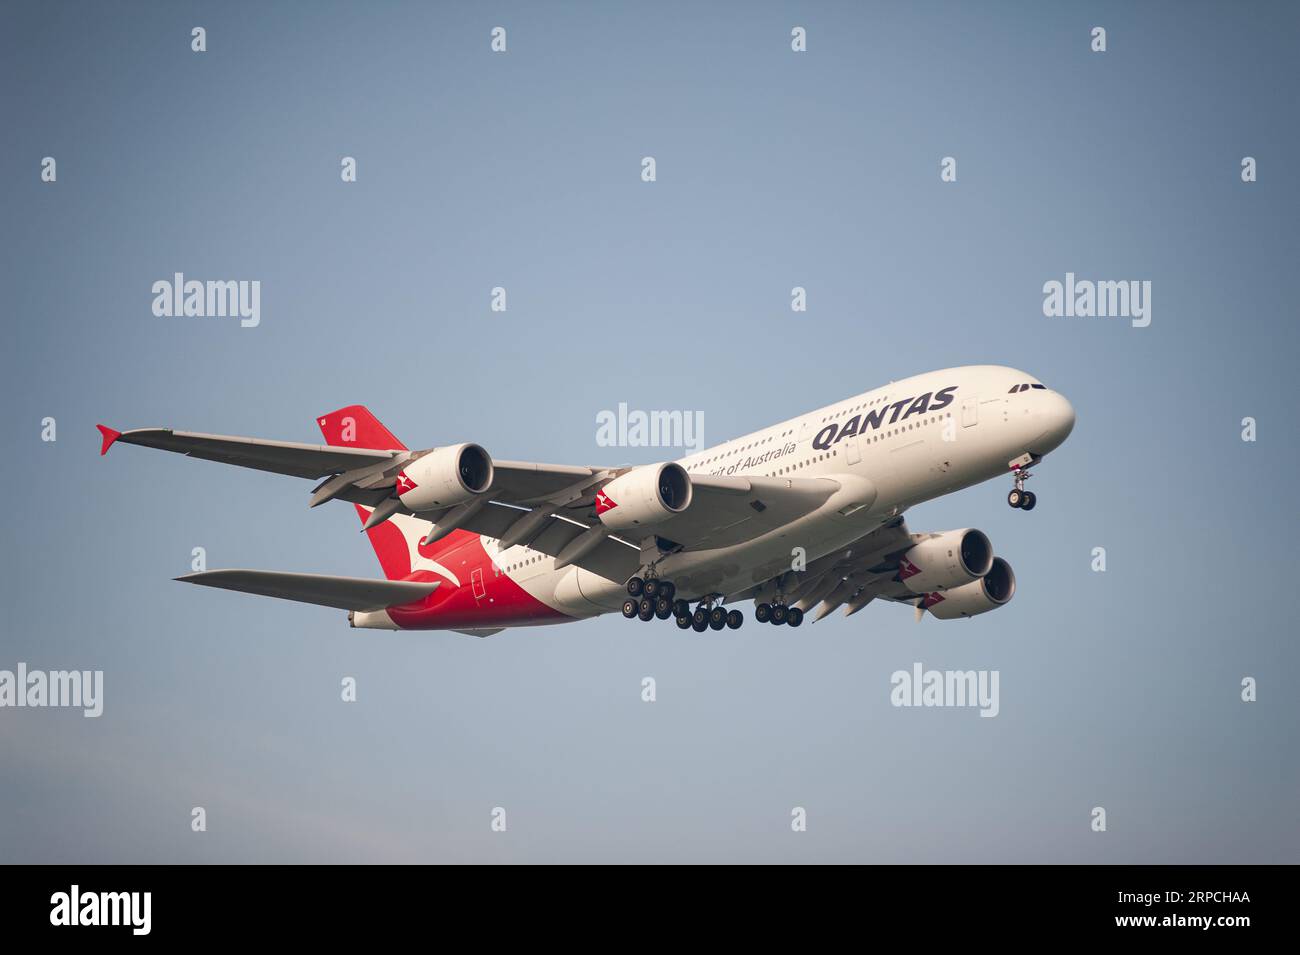 02.08.2023, Singapore, Republic of Singapore, Asia - Airbus A380-800 passenger jet of Australian airline Qantas Airways approaches Changi Airport. Stock Photo